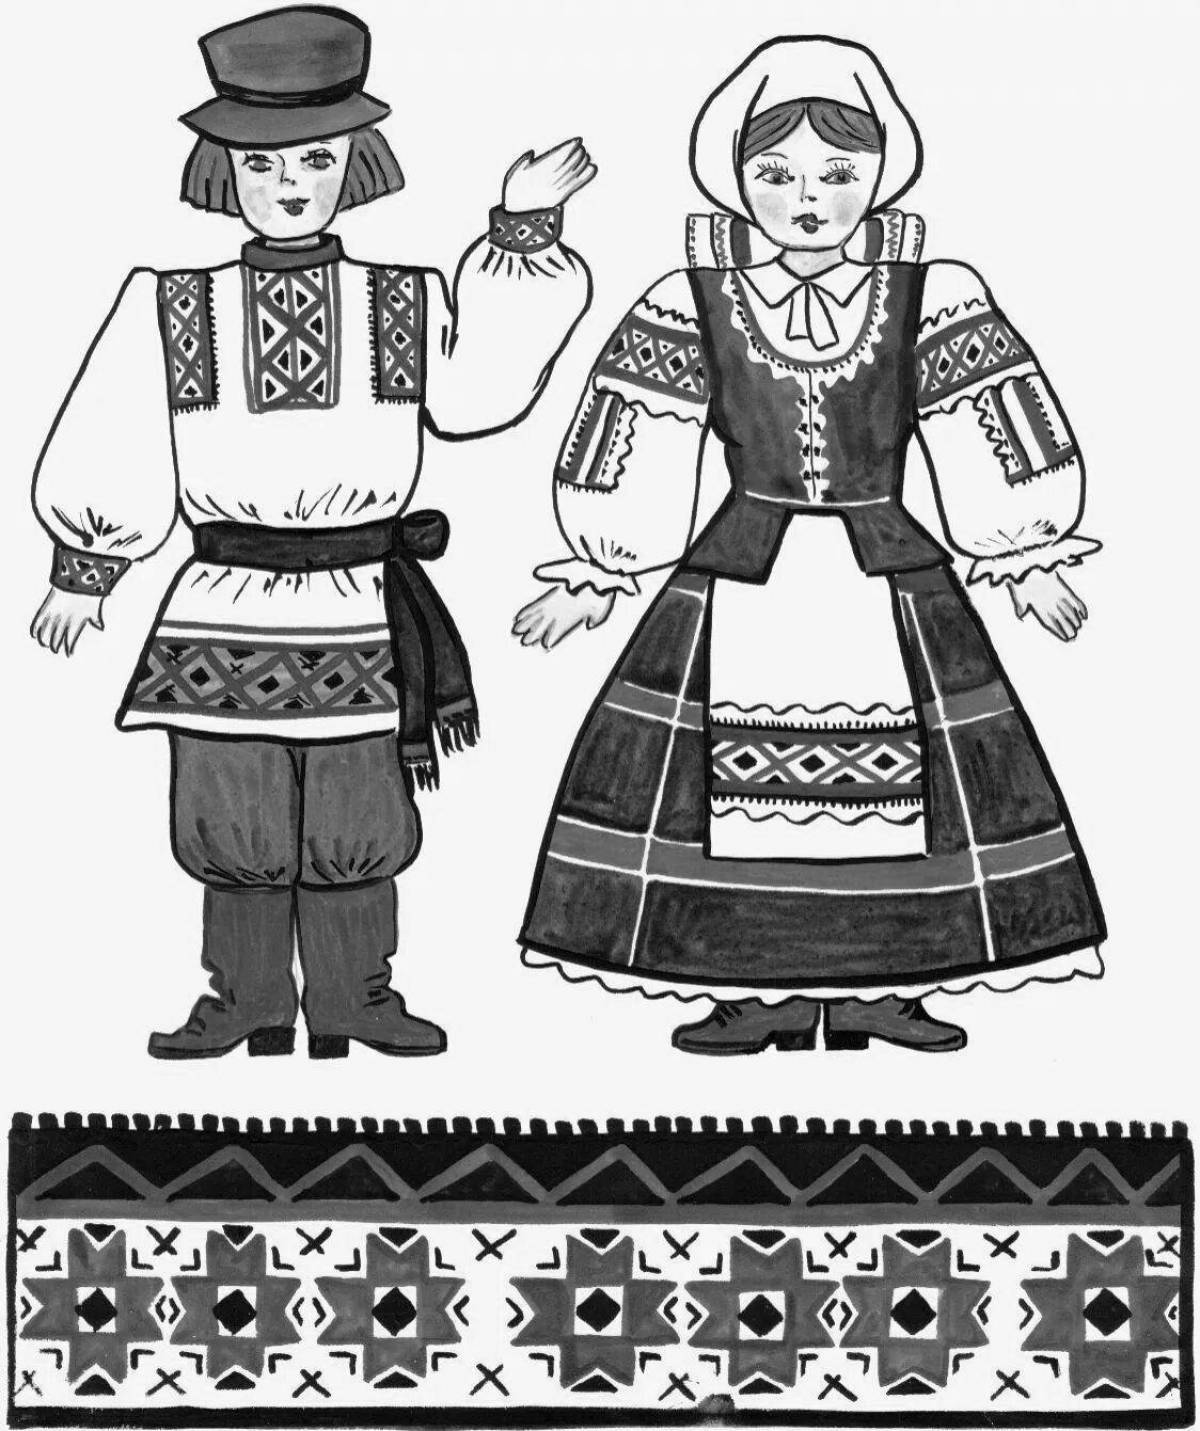 Fabulous symbols of belarus for children